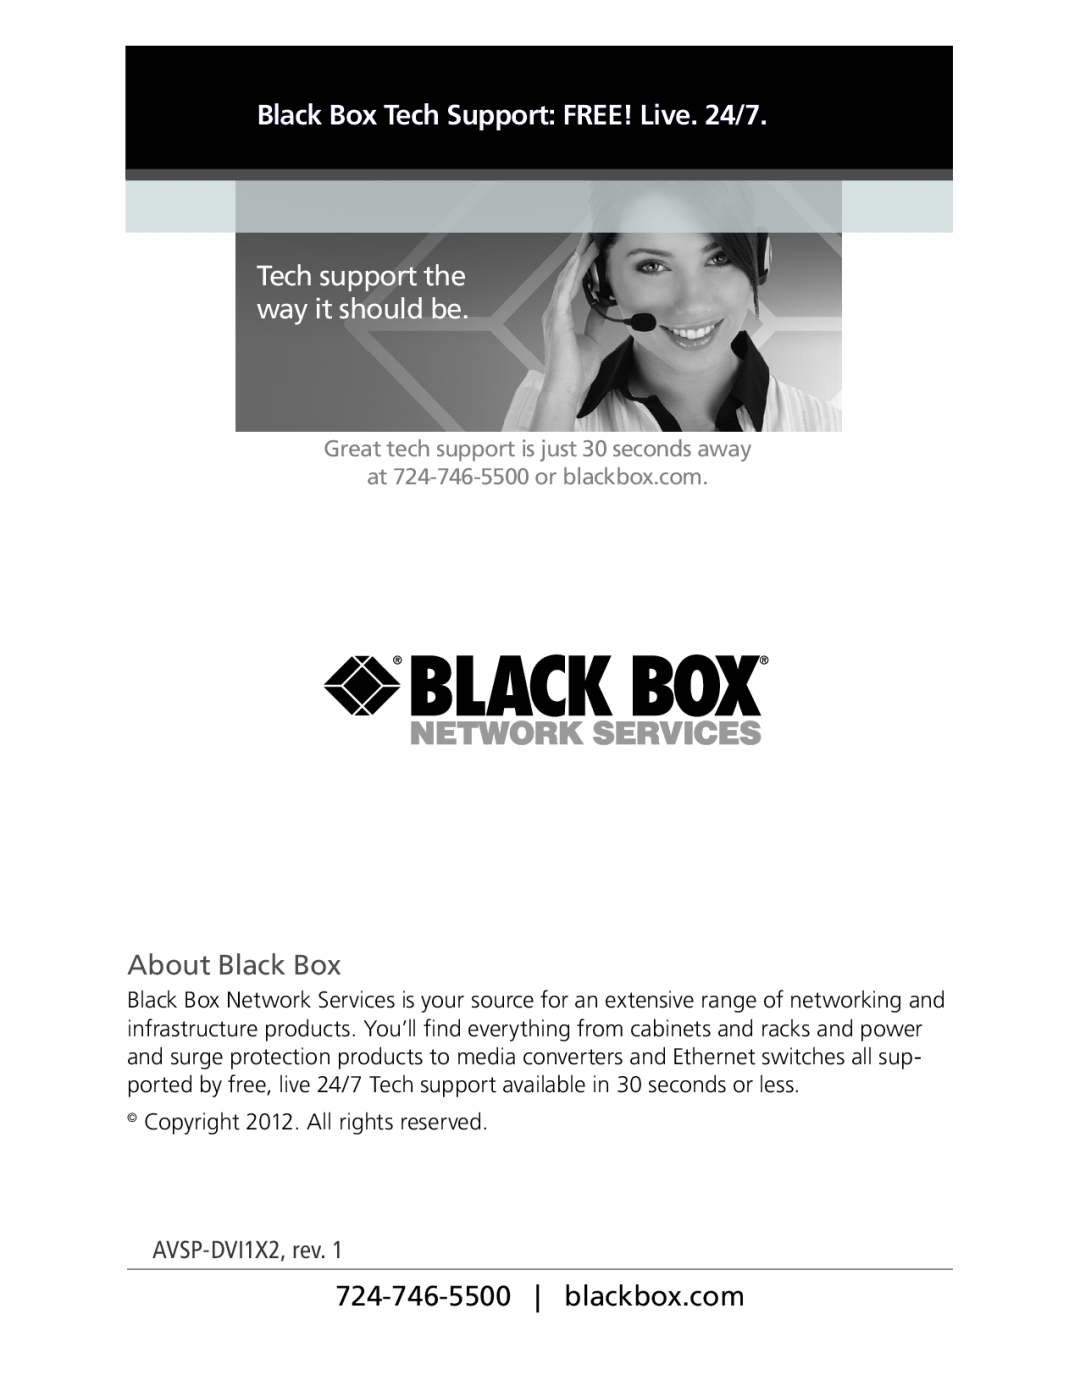 Black Box Black Box manual Tech support the way it should be, 724-746-5500| blackbox.com, at 724-746-5500or blackbox.com 